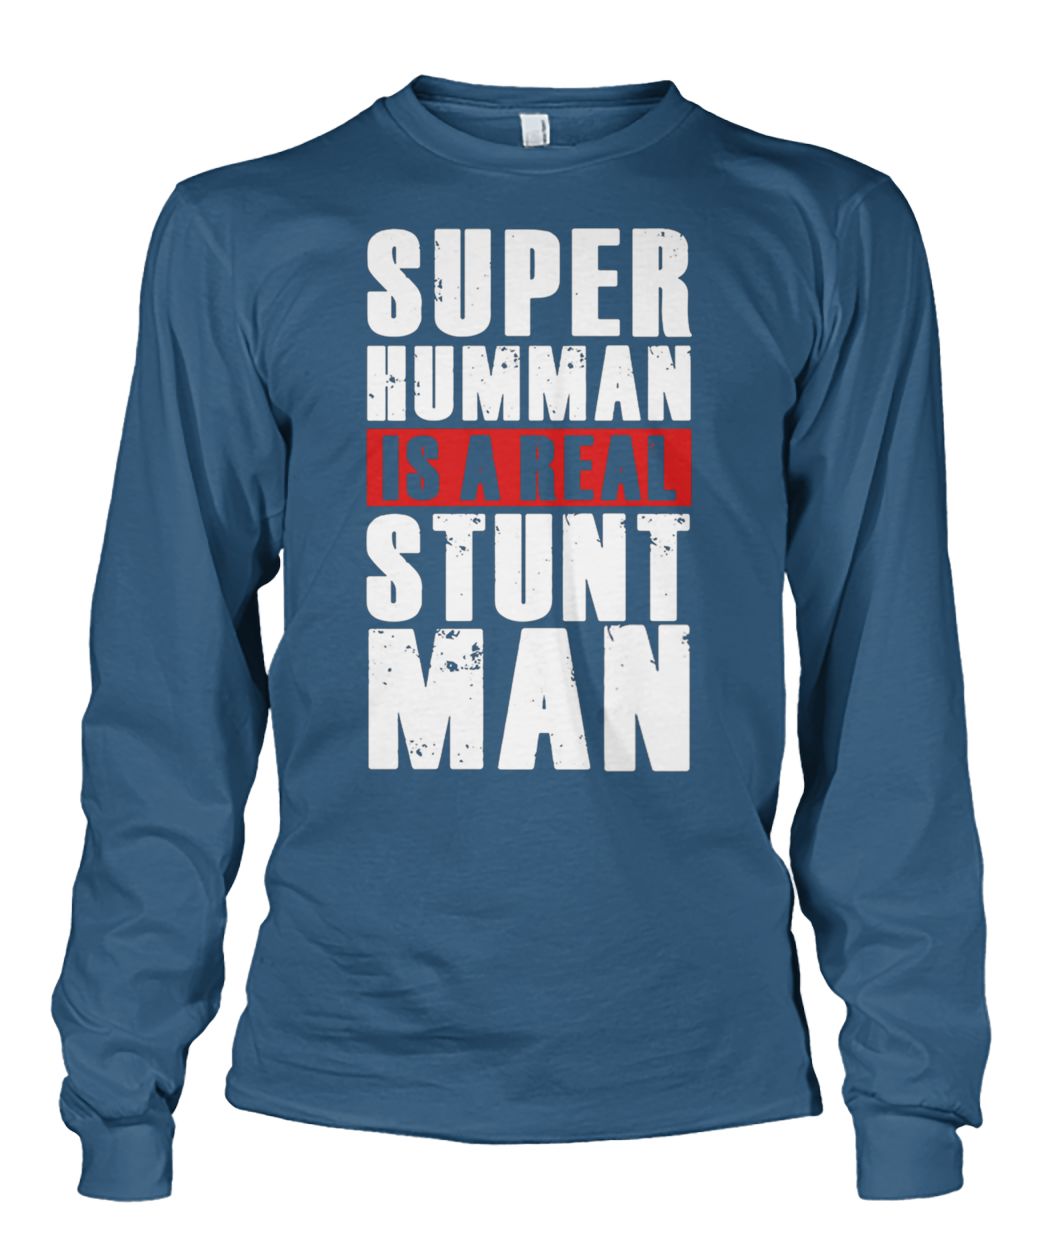 Super humman is a real stunt man unisex long sleeve